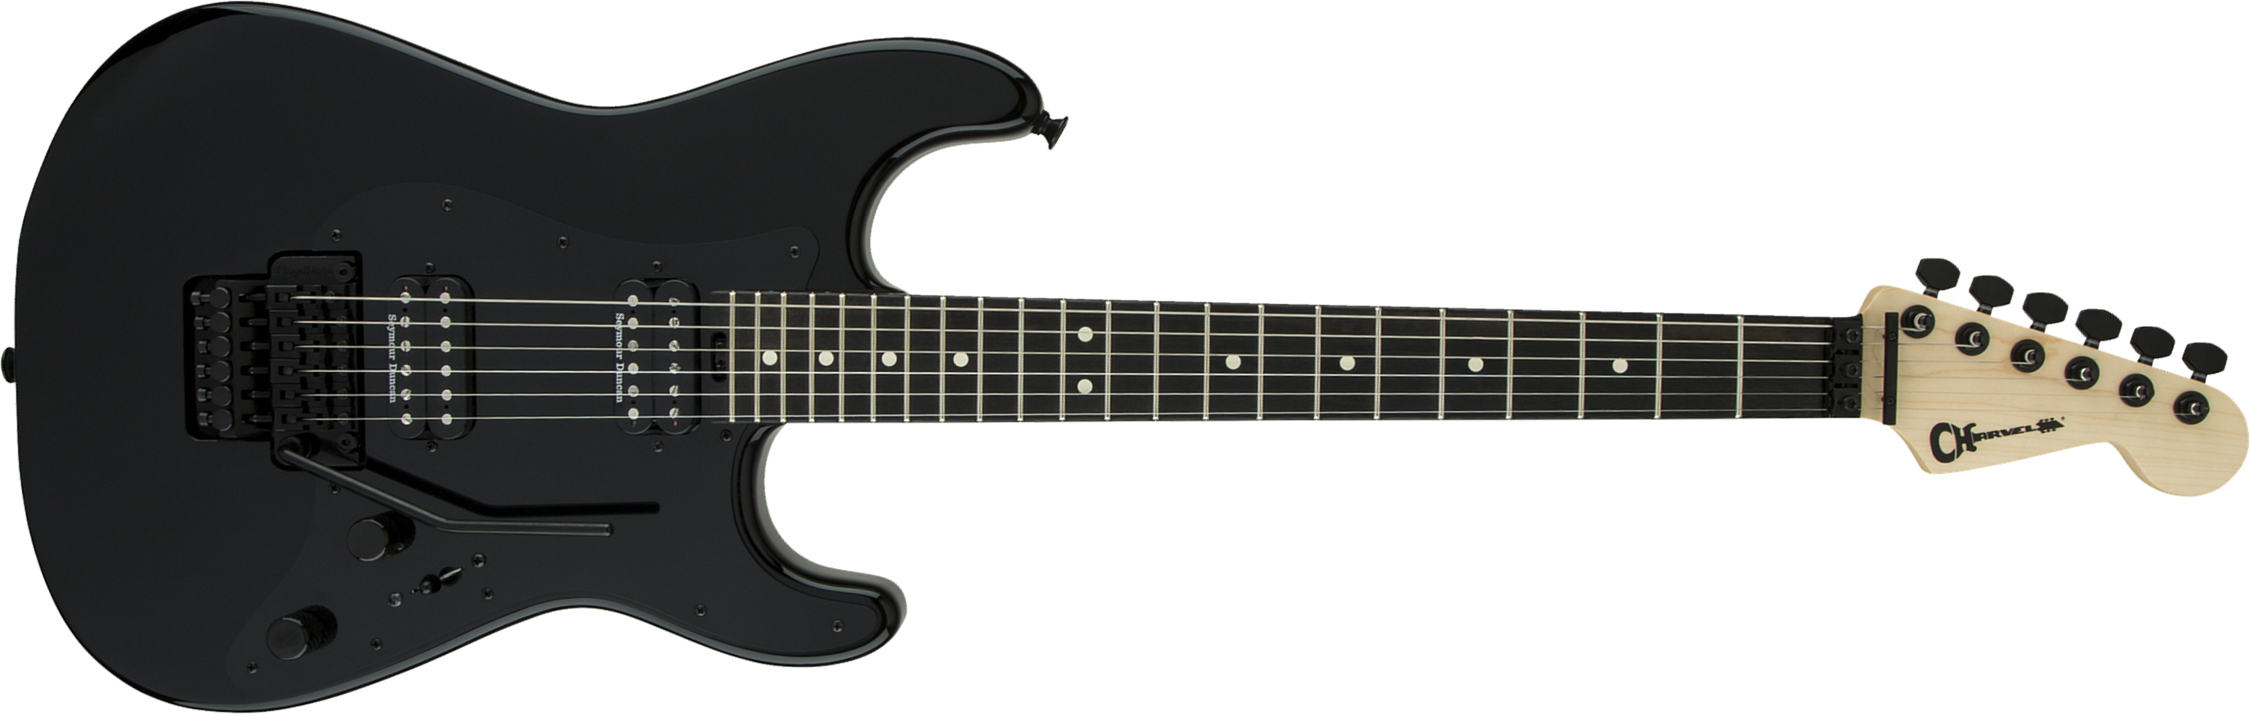 Charvel So-cal Style 1 Hh Fr E Pro-mod 2h Seymour Duncan Eb - Black - E-Gitarre in Str-Form - Main picture